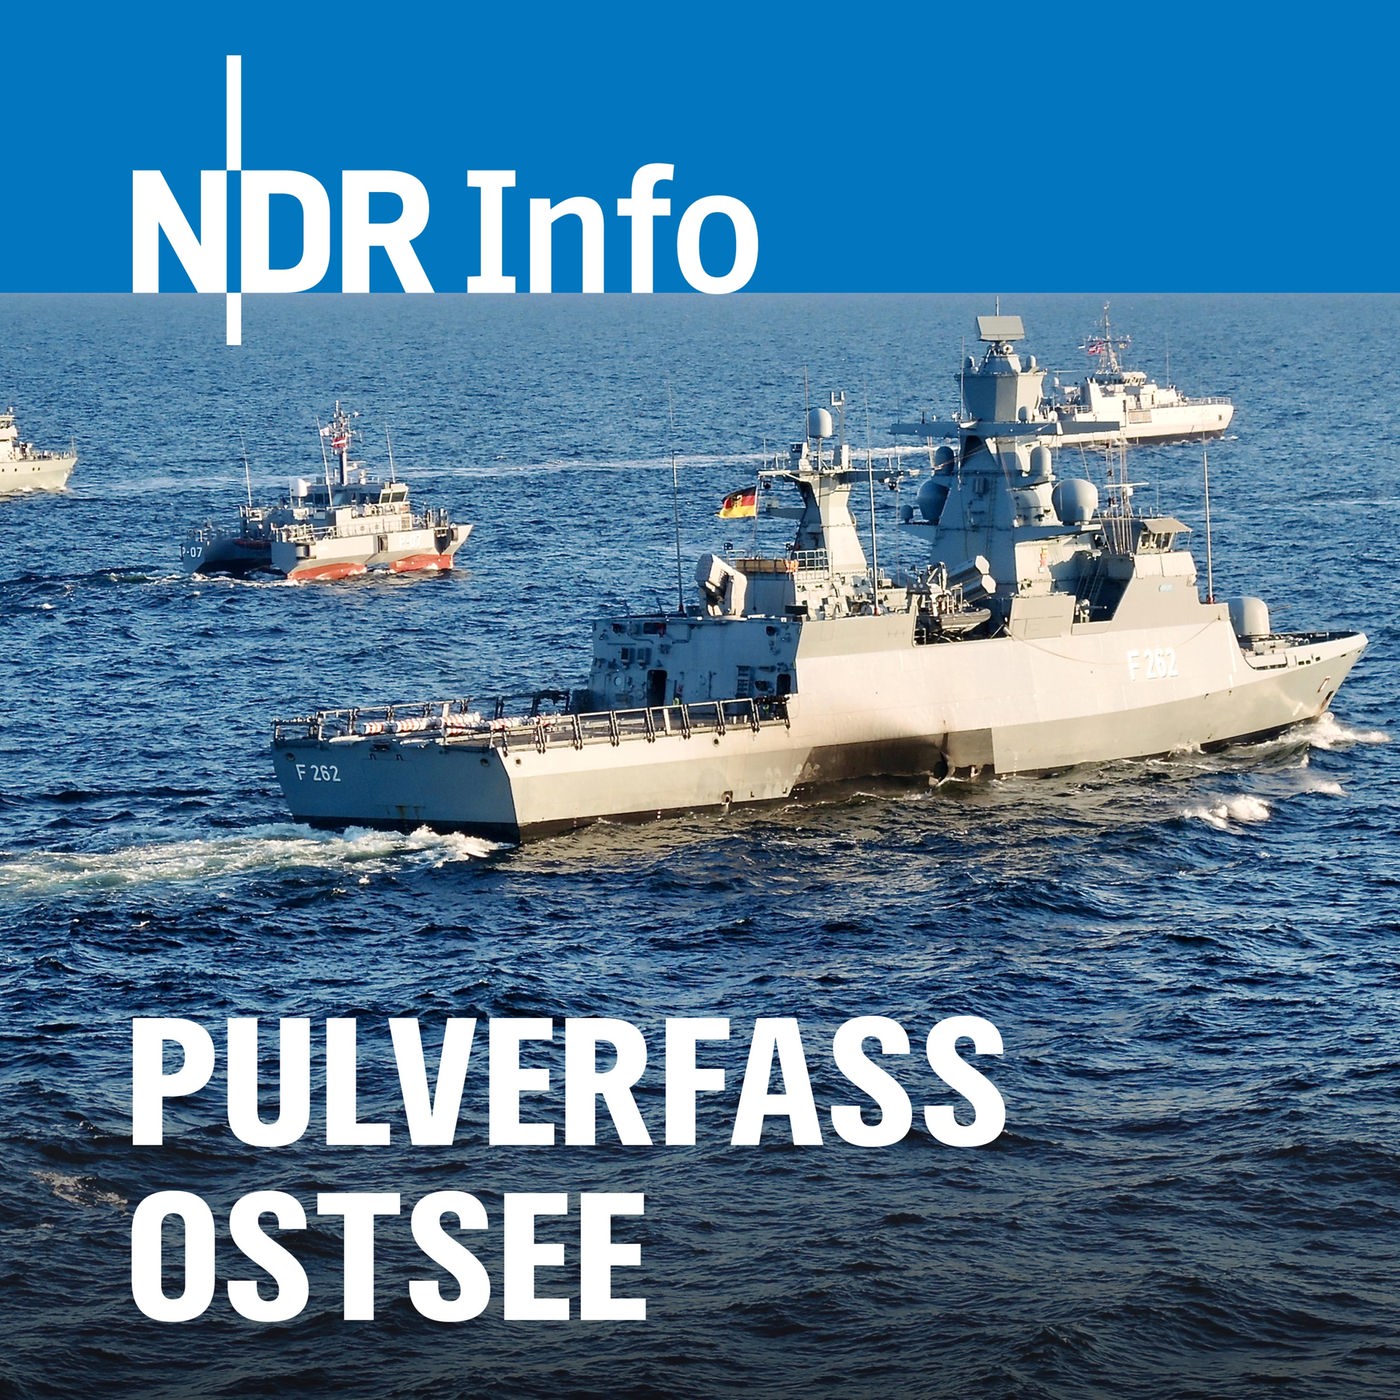 Pulverfass Ostsee: Der Oppenheimer-Moment (4/4)